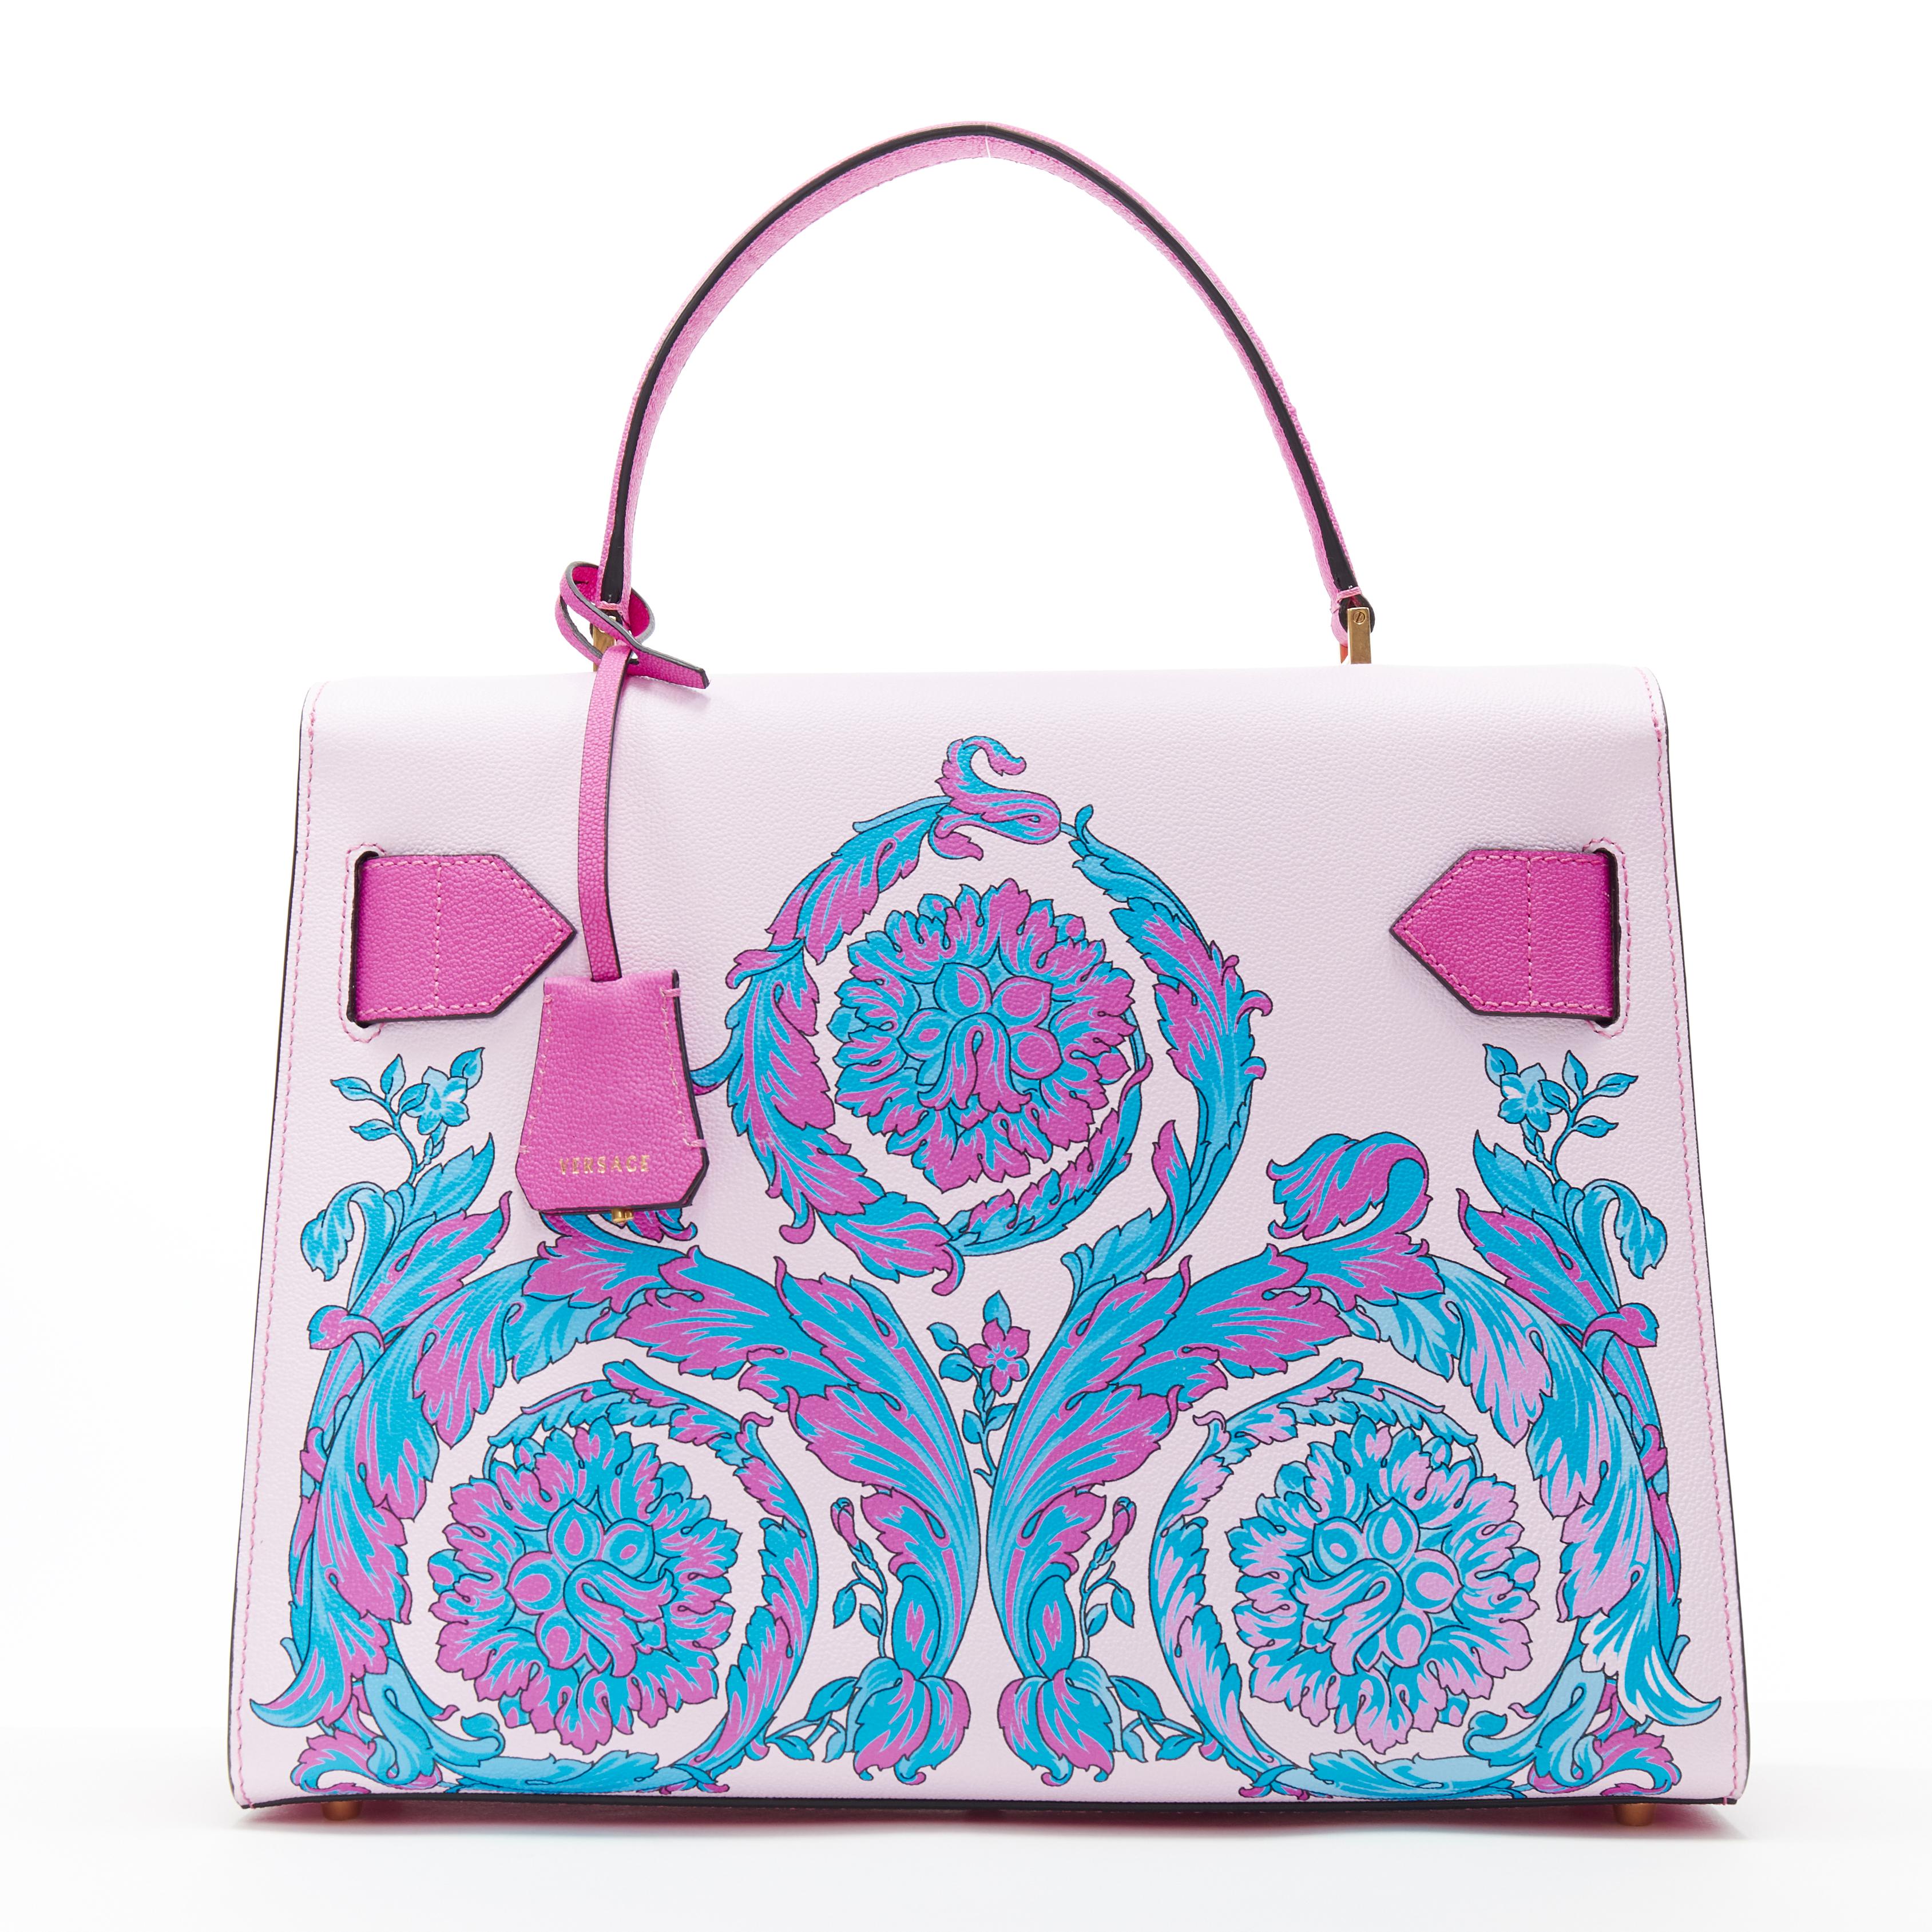 Gray new VERSACE Tribute Diana Technicolor Baroque print top handle Kelly satchel bag